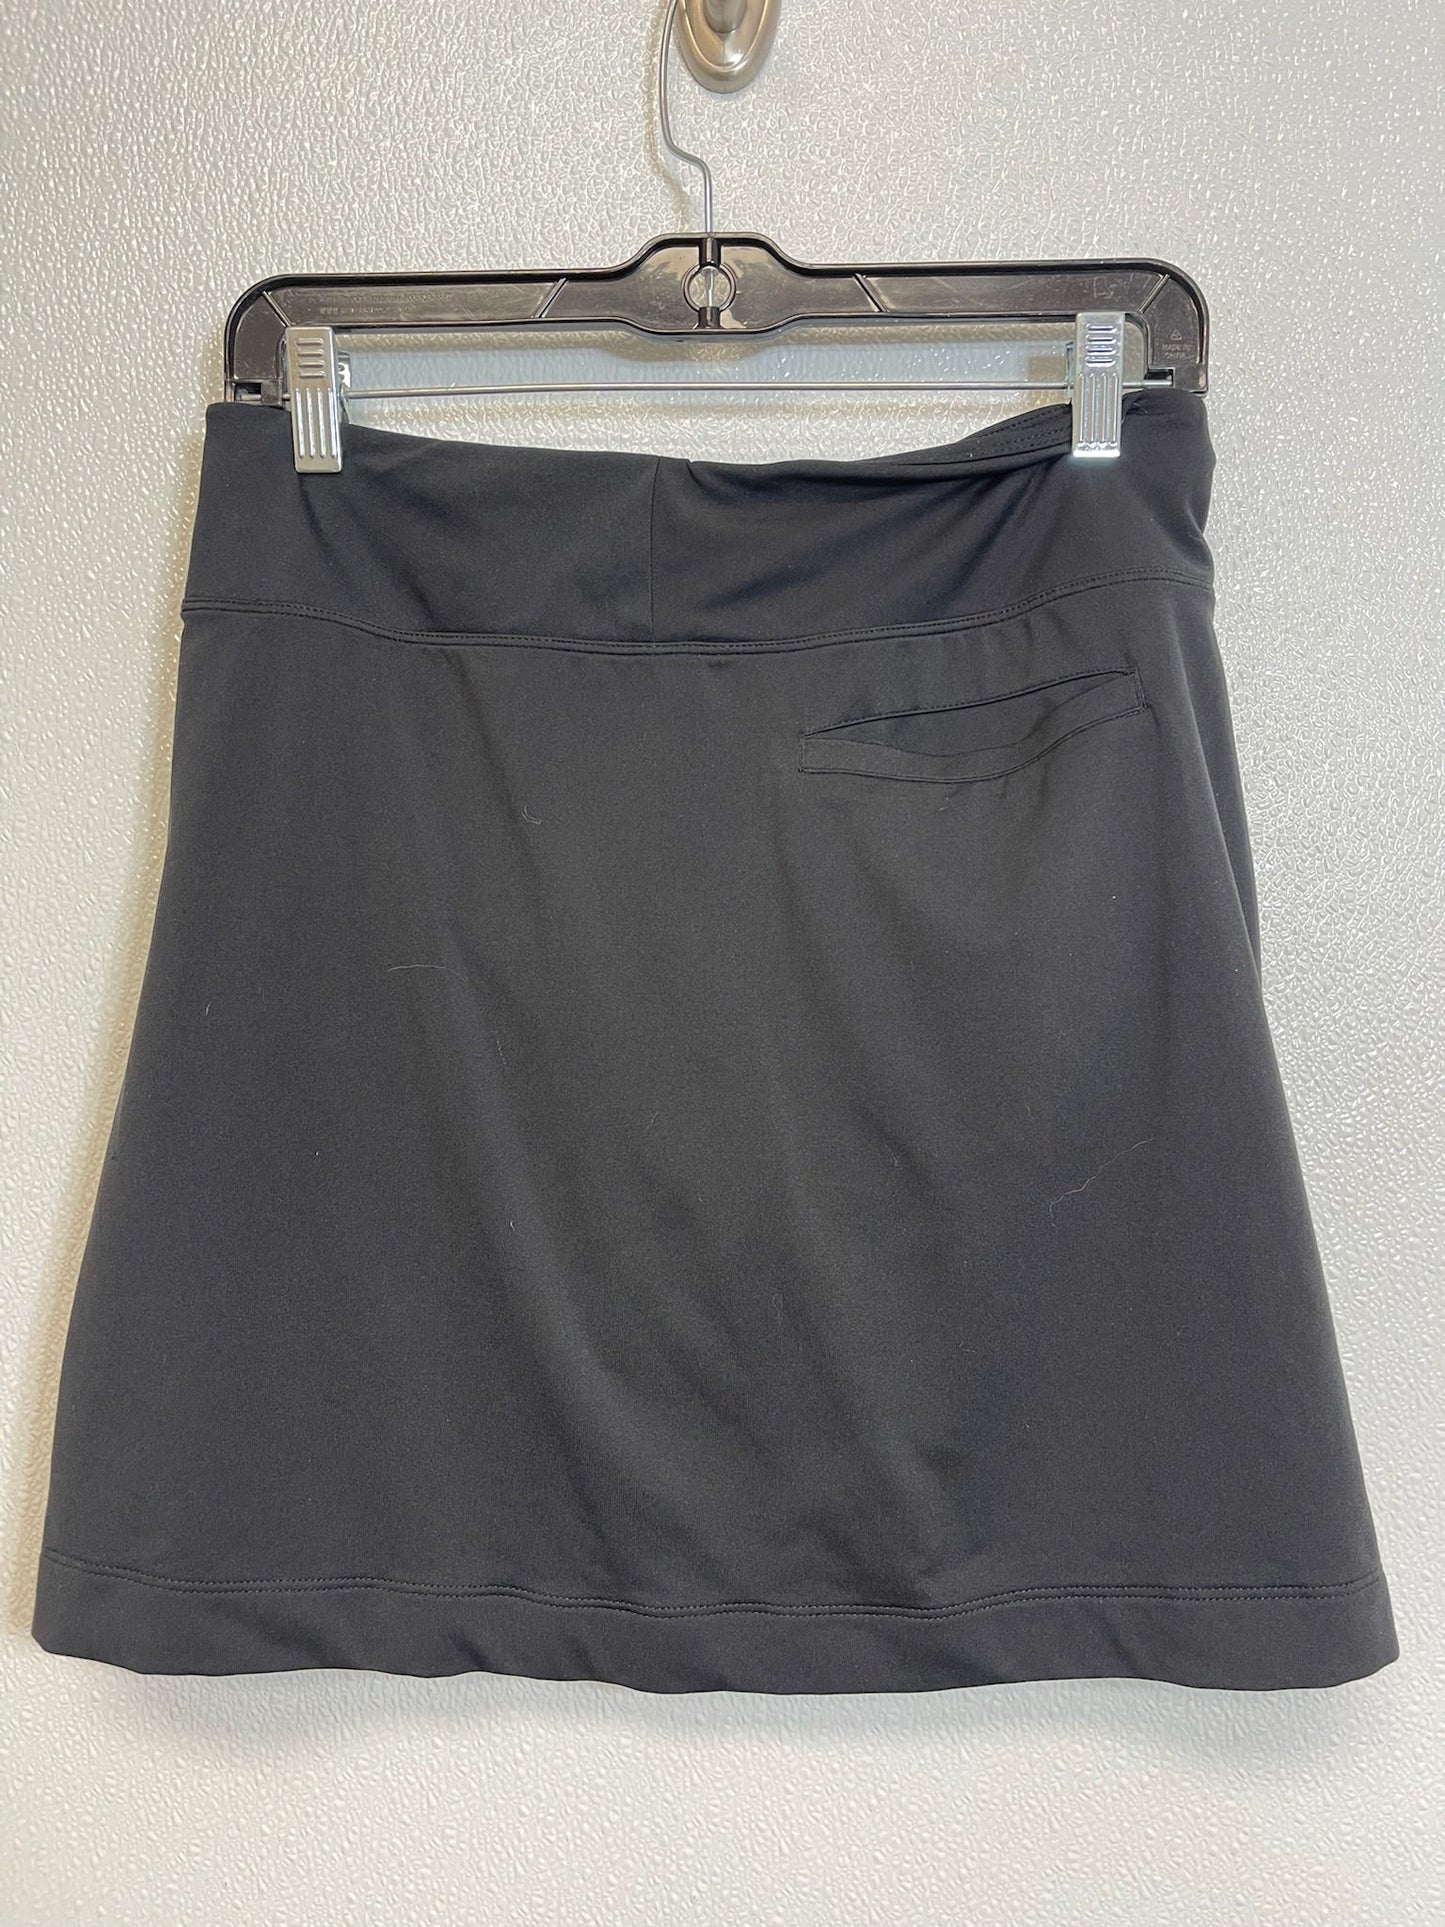 Black Athletic Skirt Skort Nike Apparel, Size S